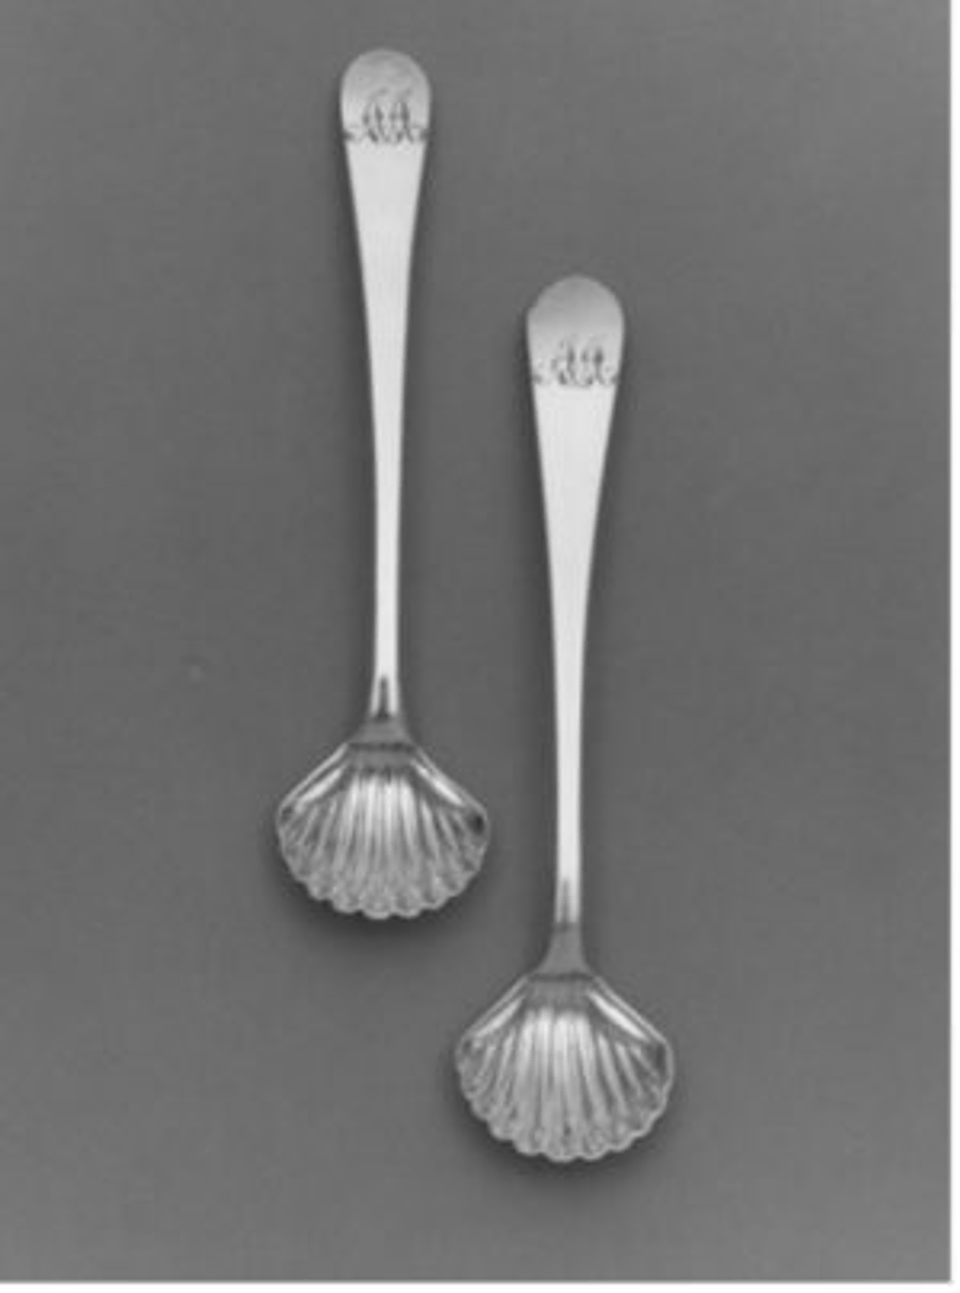 Photograph of salt spoons